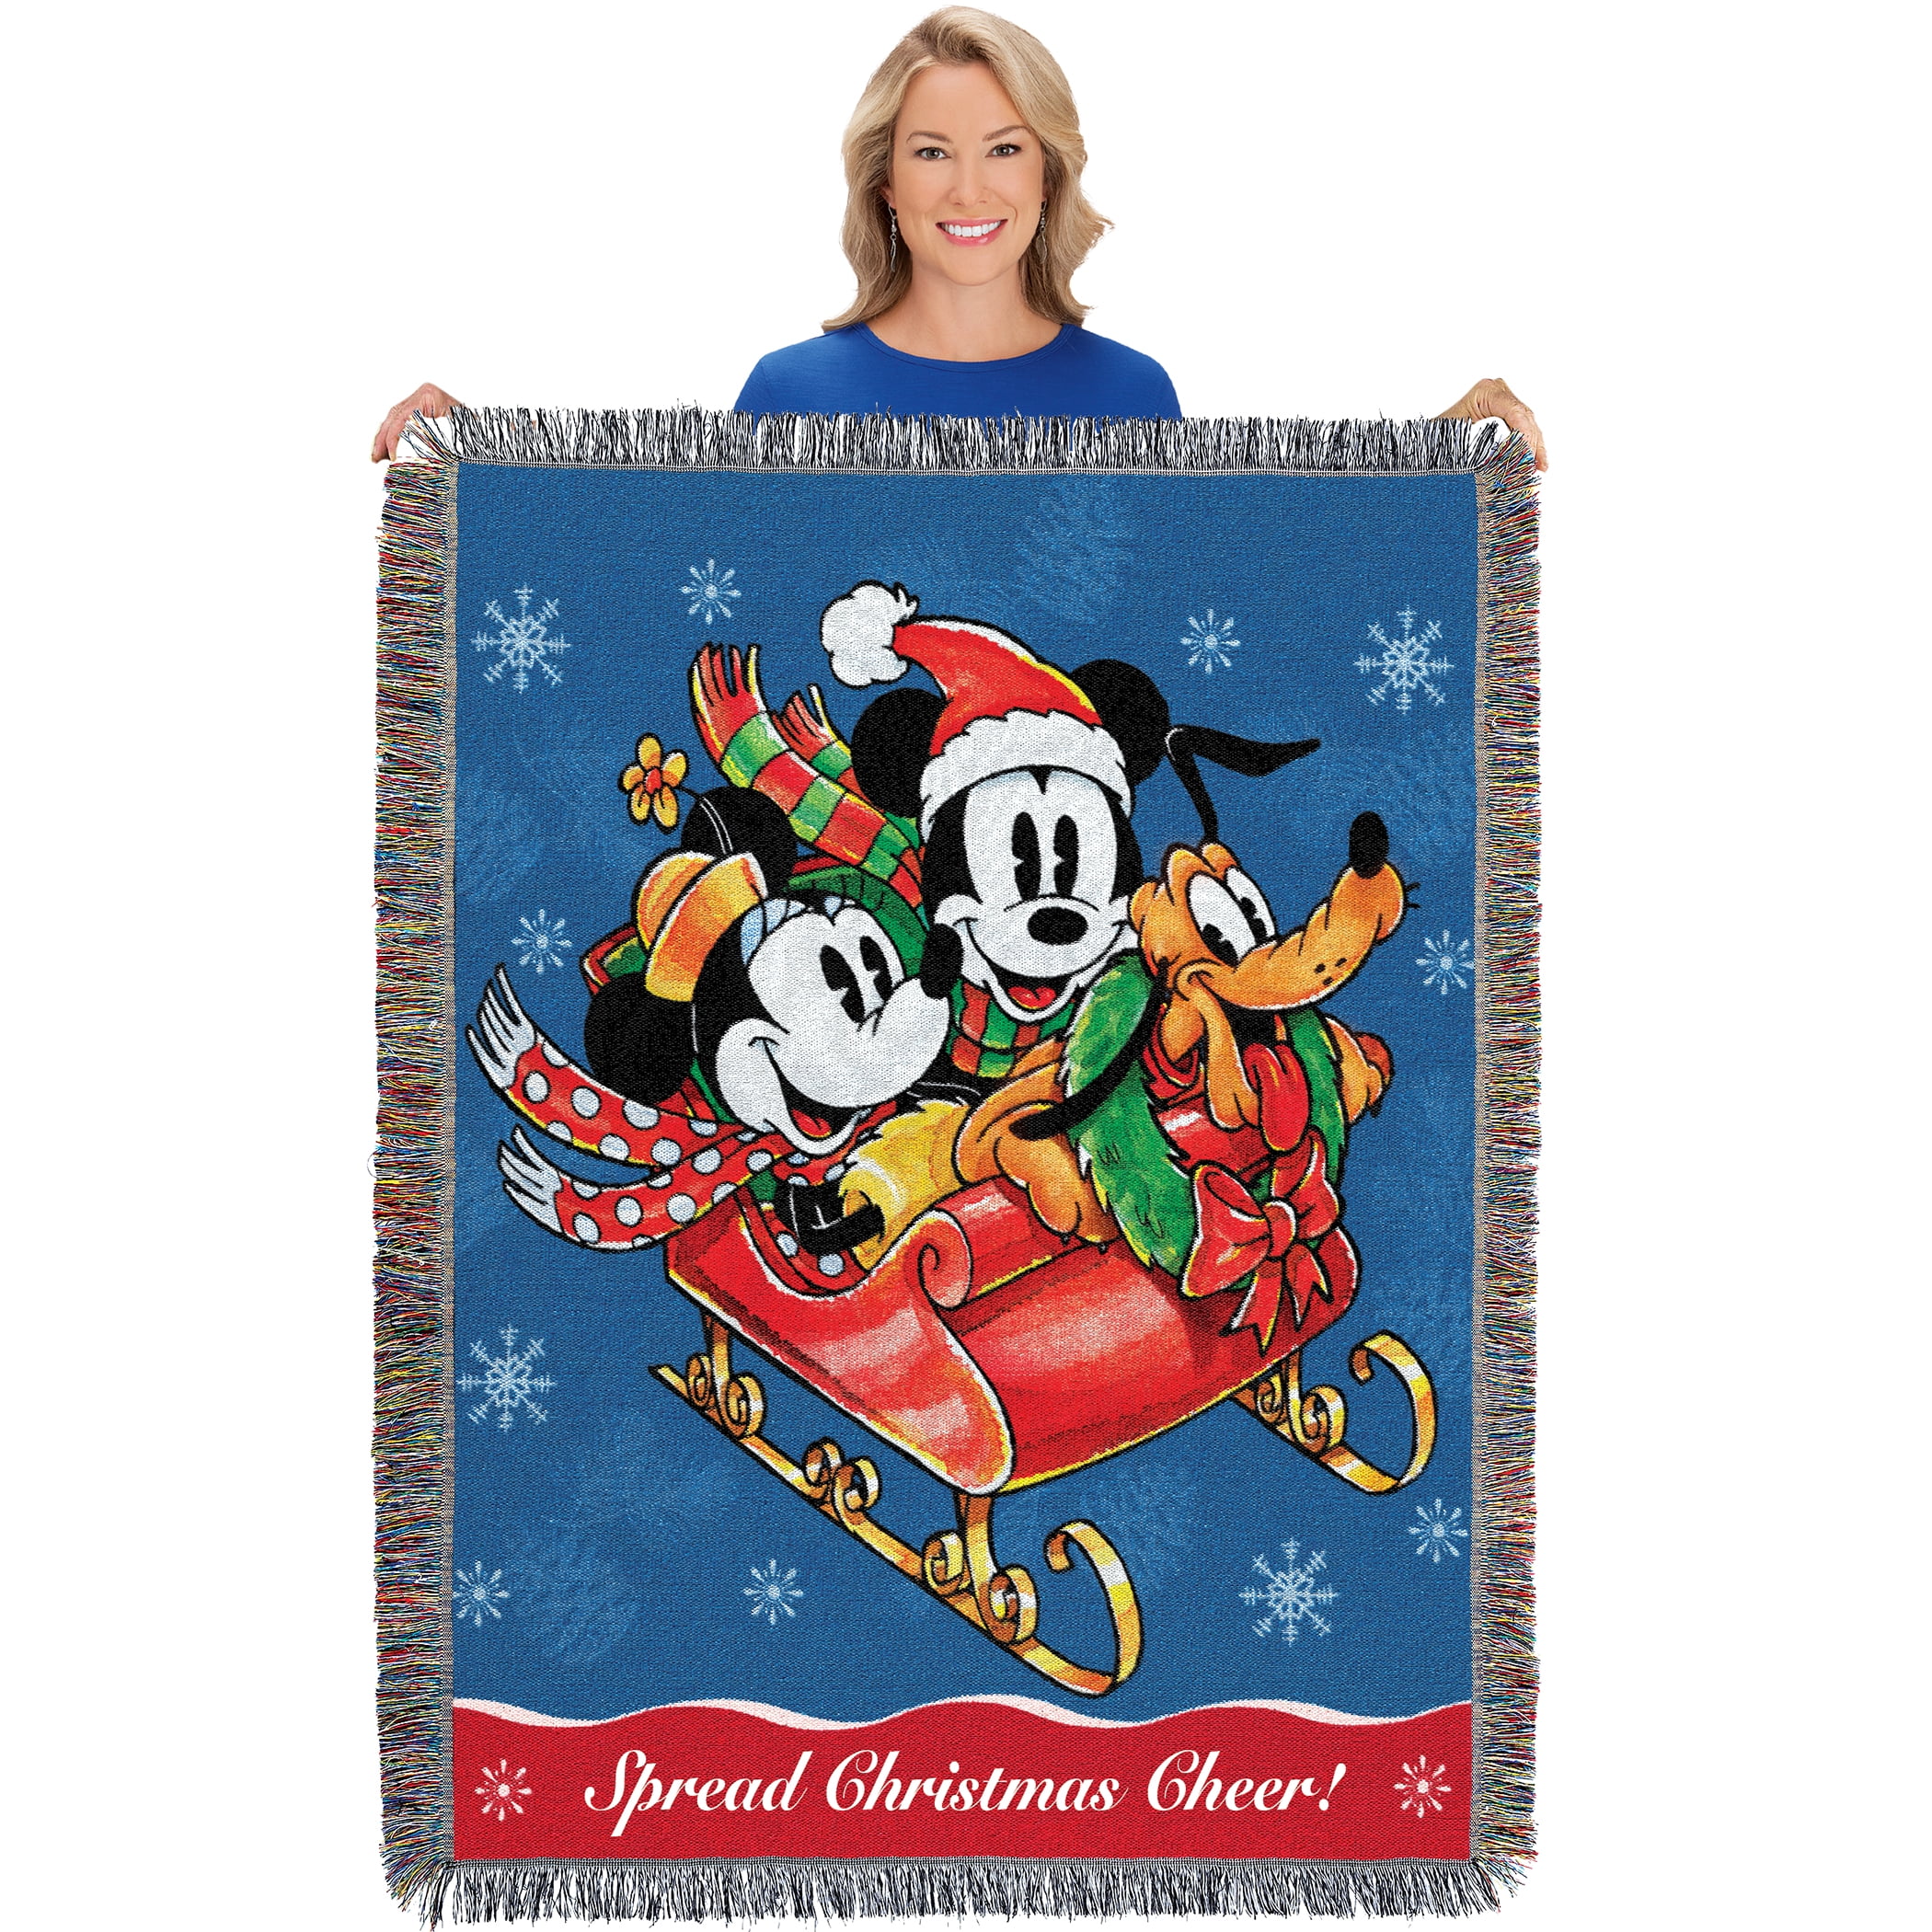 Disney Aladdin Tapestry Throw Blanket, 48x60, Multicolor 